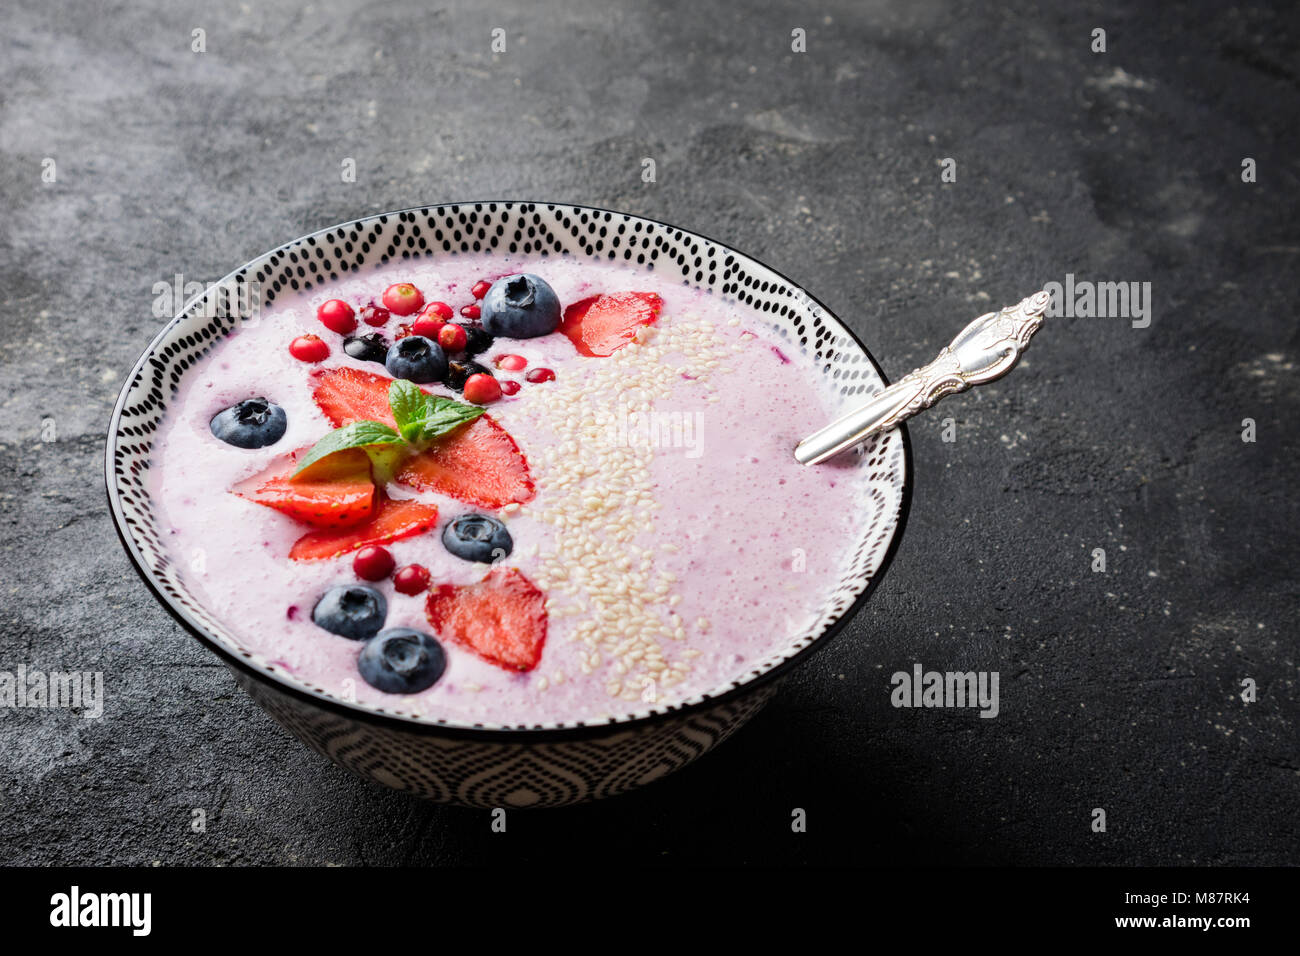 https://c8.alamy.com/comp/M87RK4/smoothies-bowl-with-berries-strawberries-blueberries-cranberries-currants-M87RK4.jpg